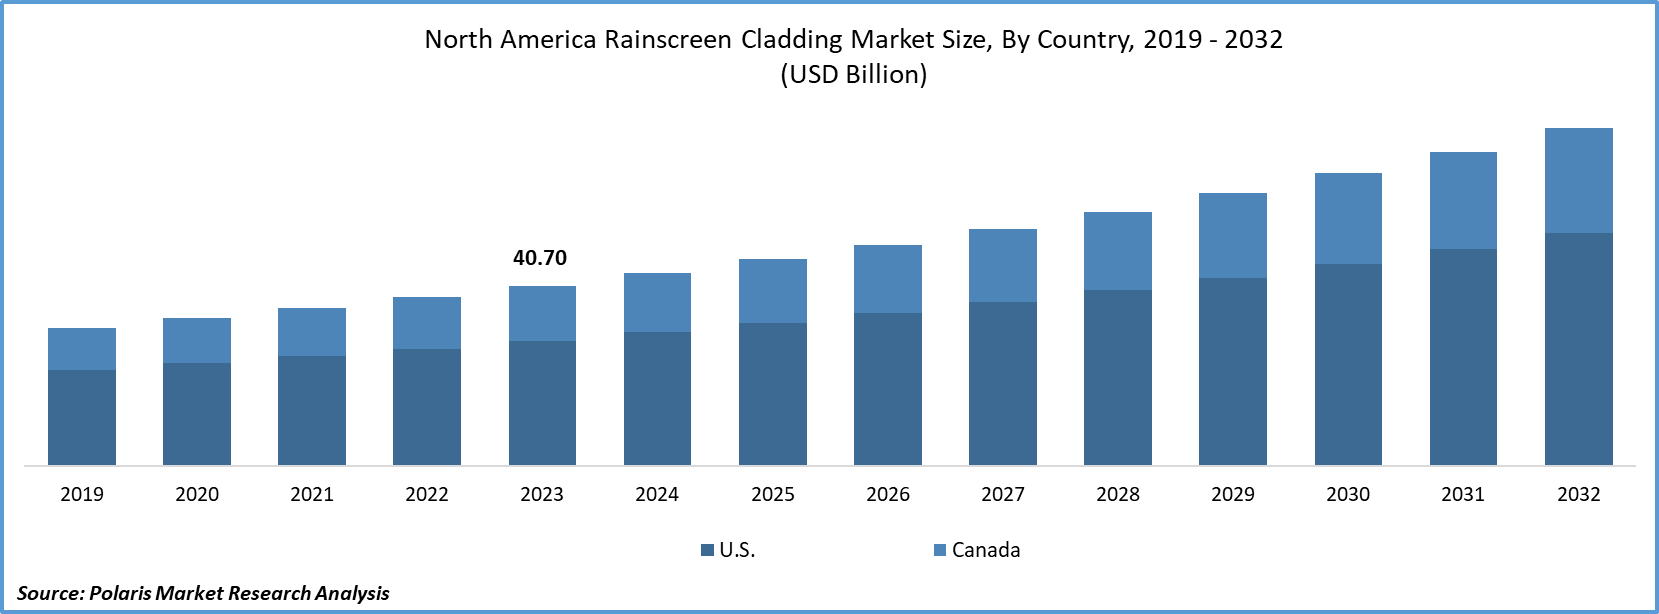 North America Rainscreen Cladding Market Size